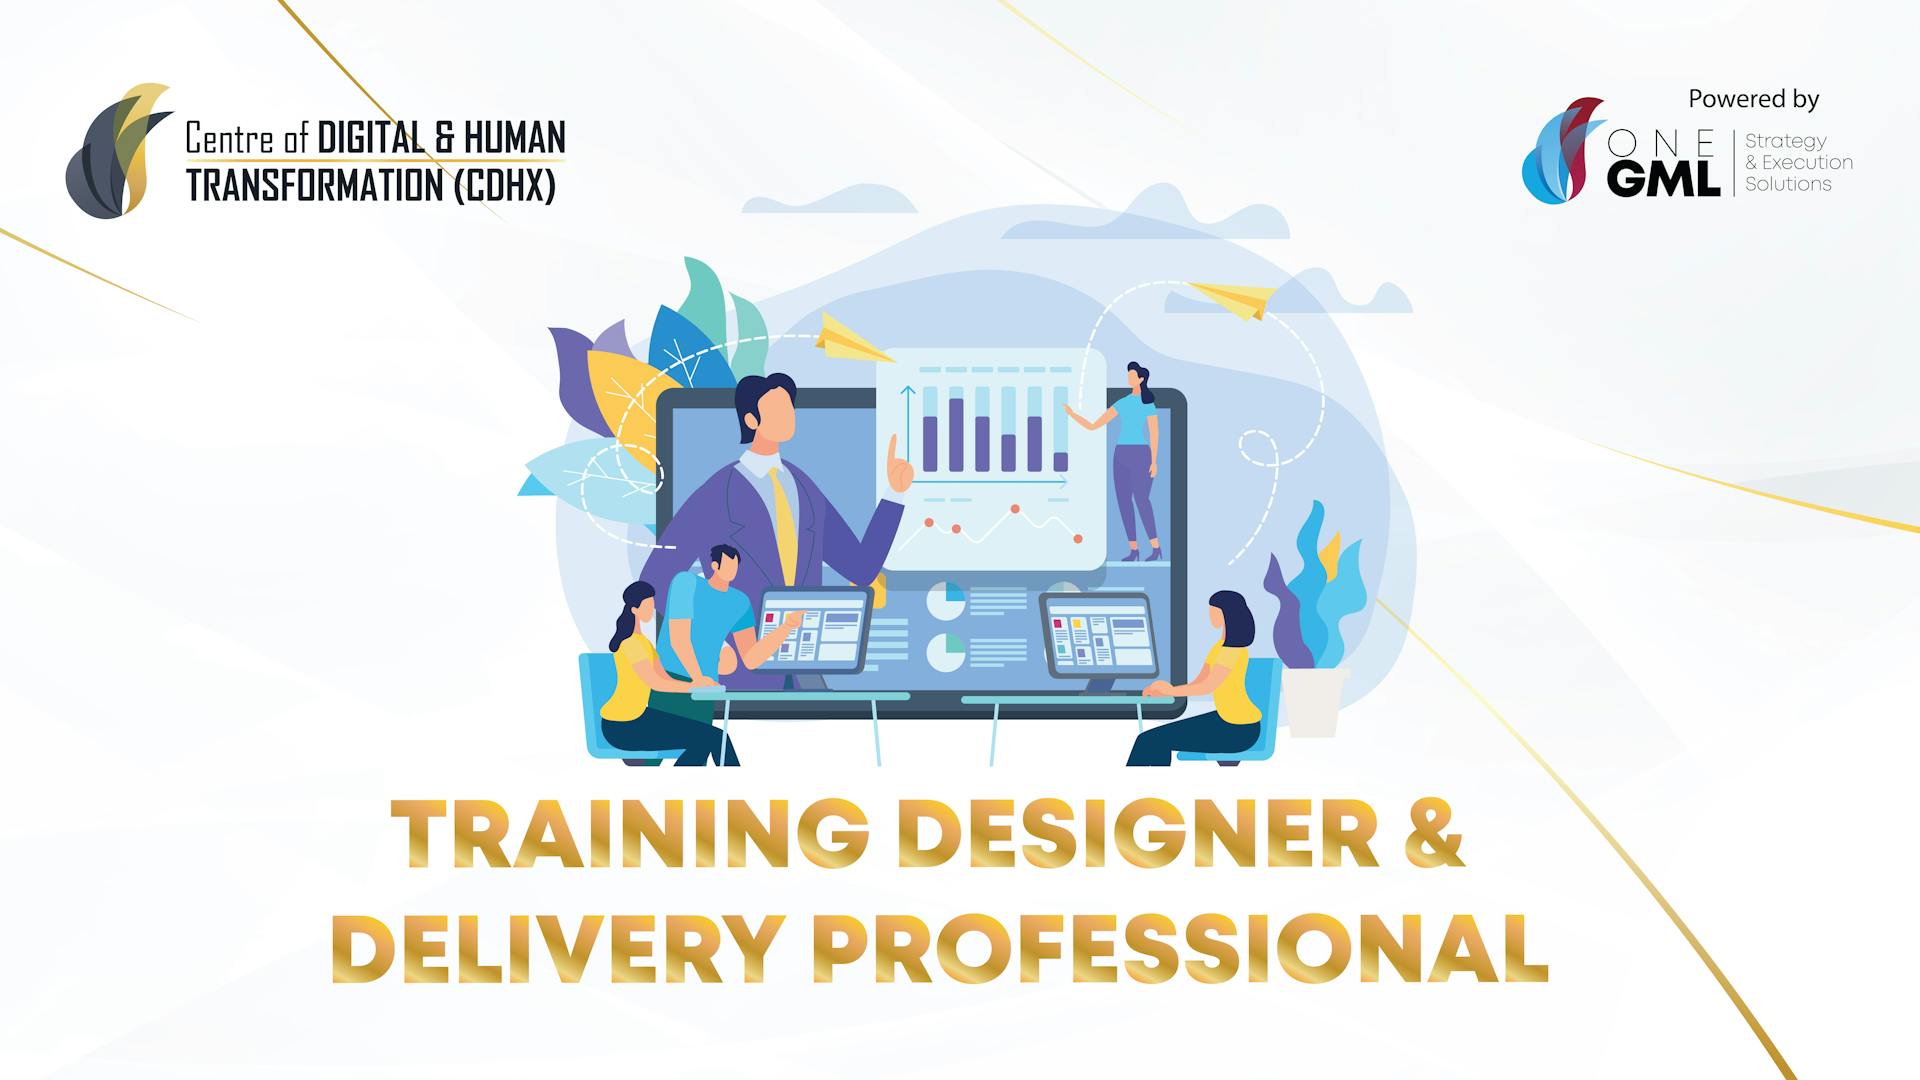 jual-pelatihan-training-harga-training-designer-and-delivery-professional-01.jpg